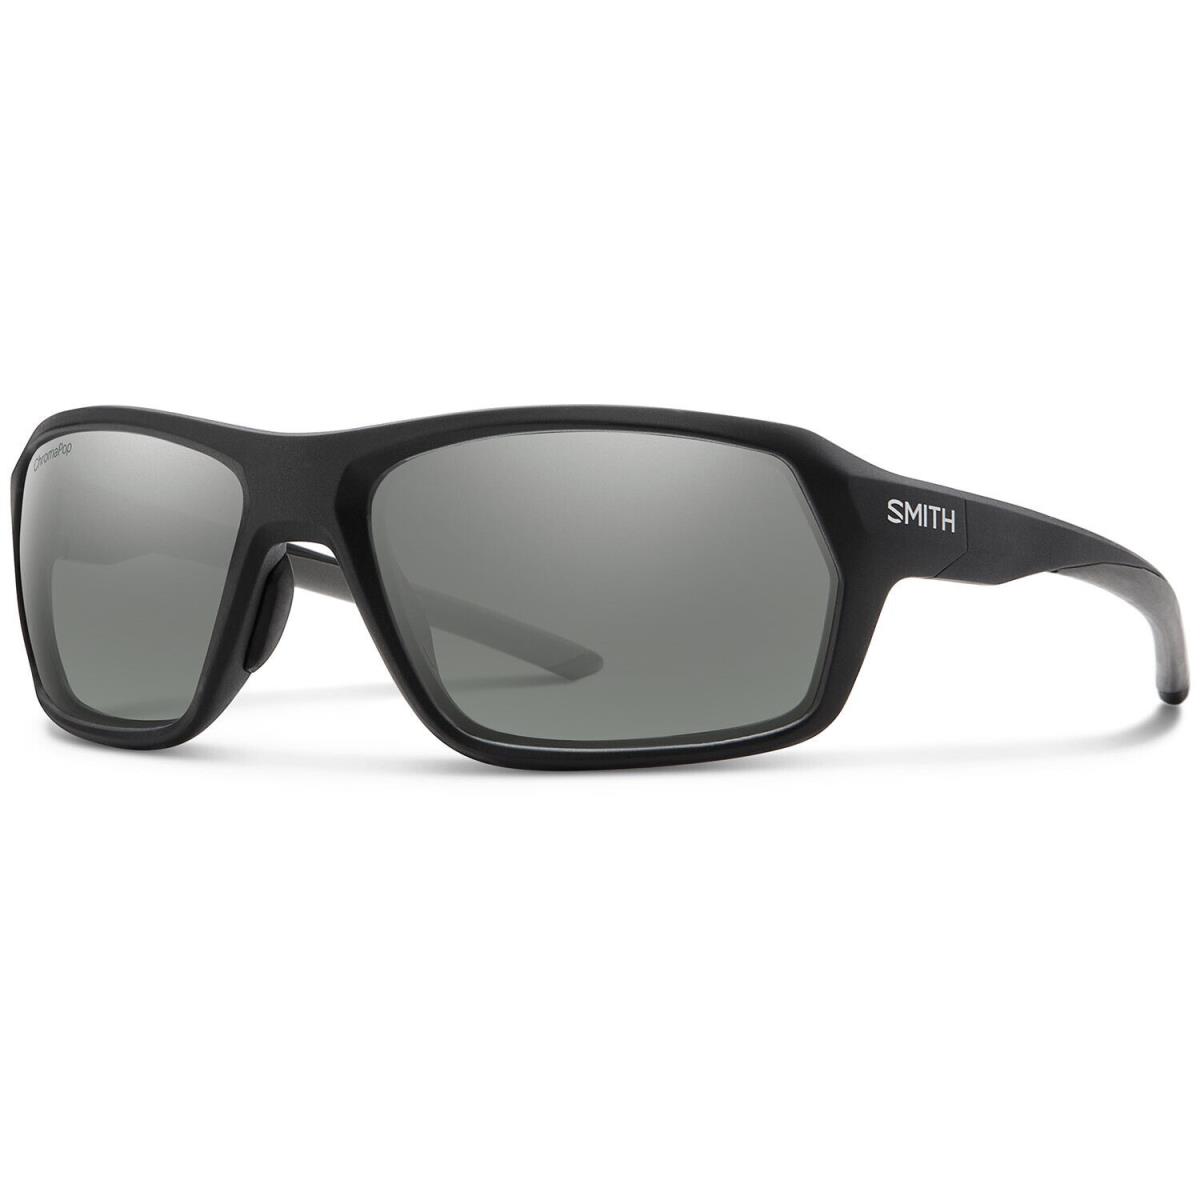 Smith Optics Rebound Sunglasses Photochromic Clear to Gray Black Frame